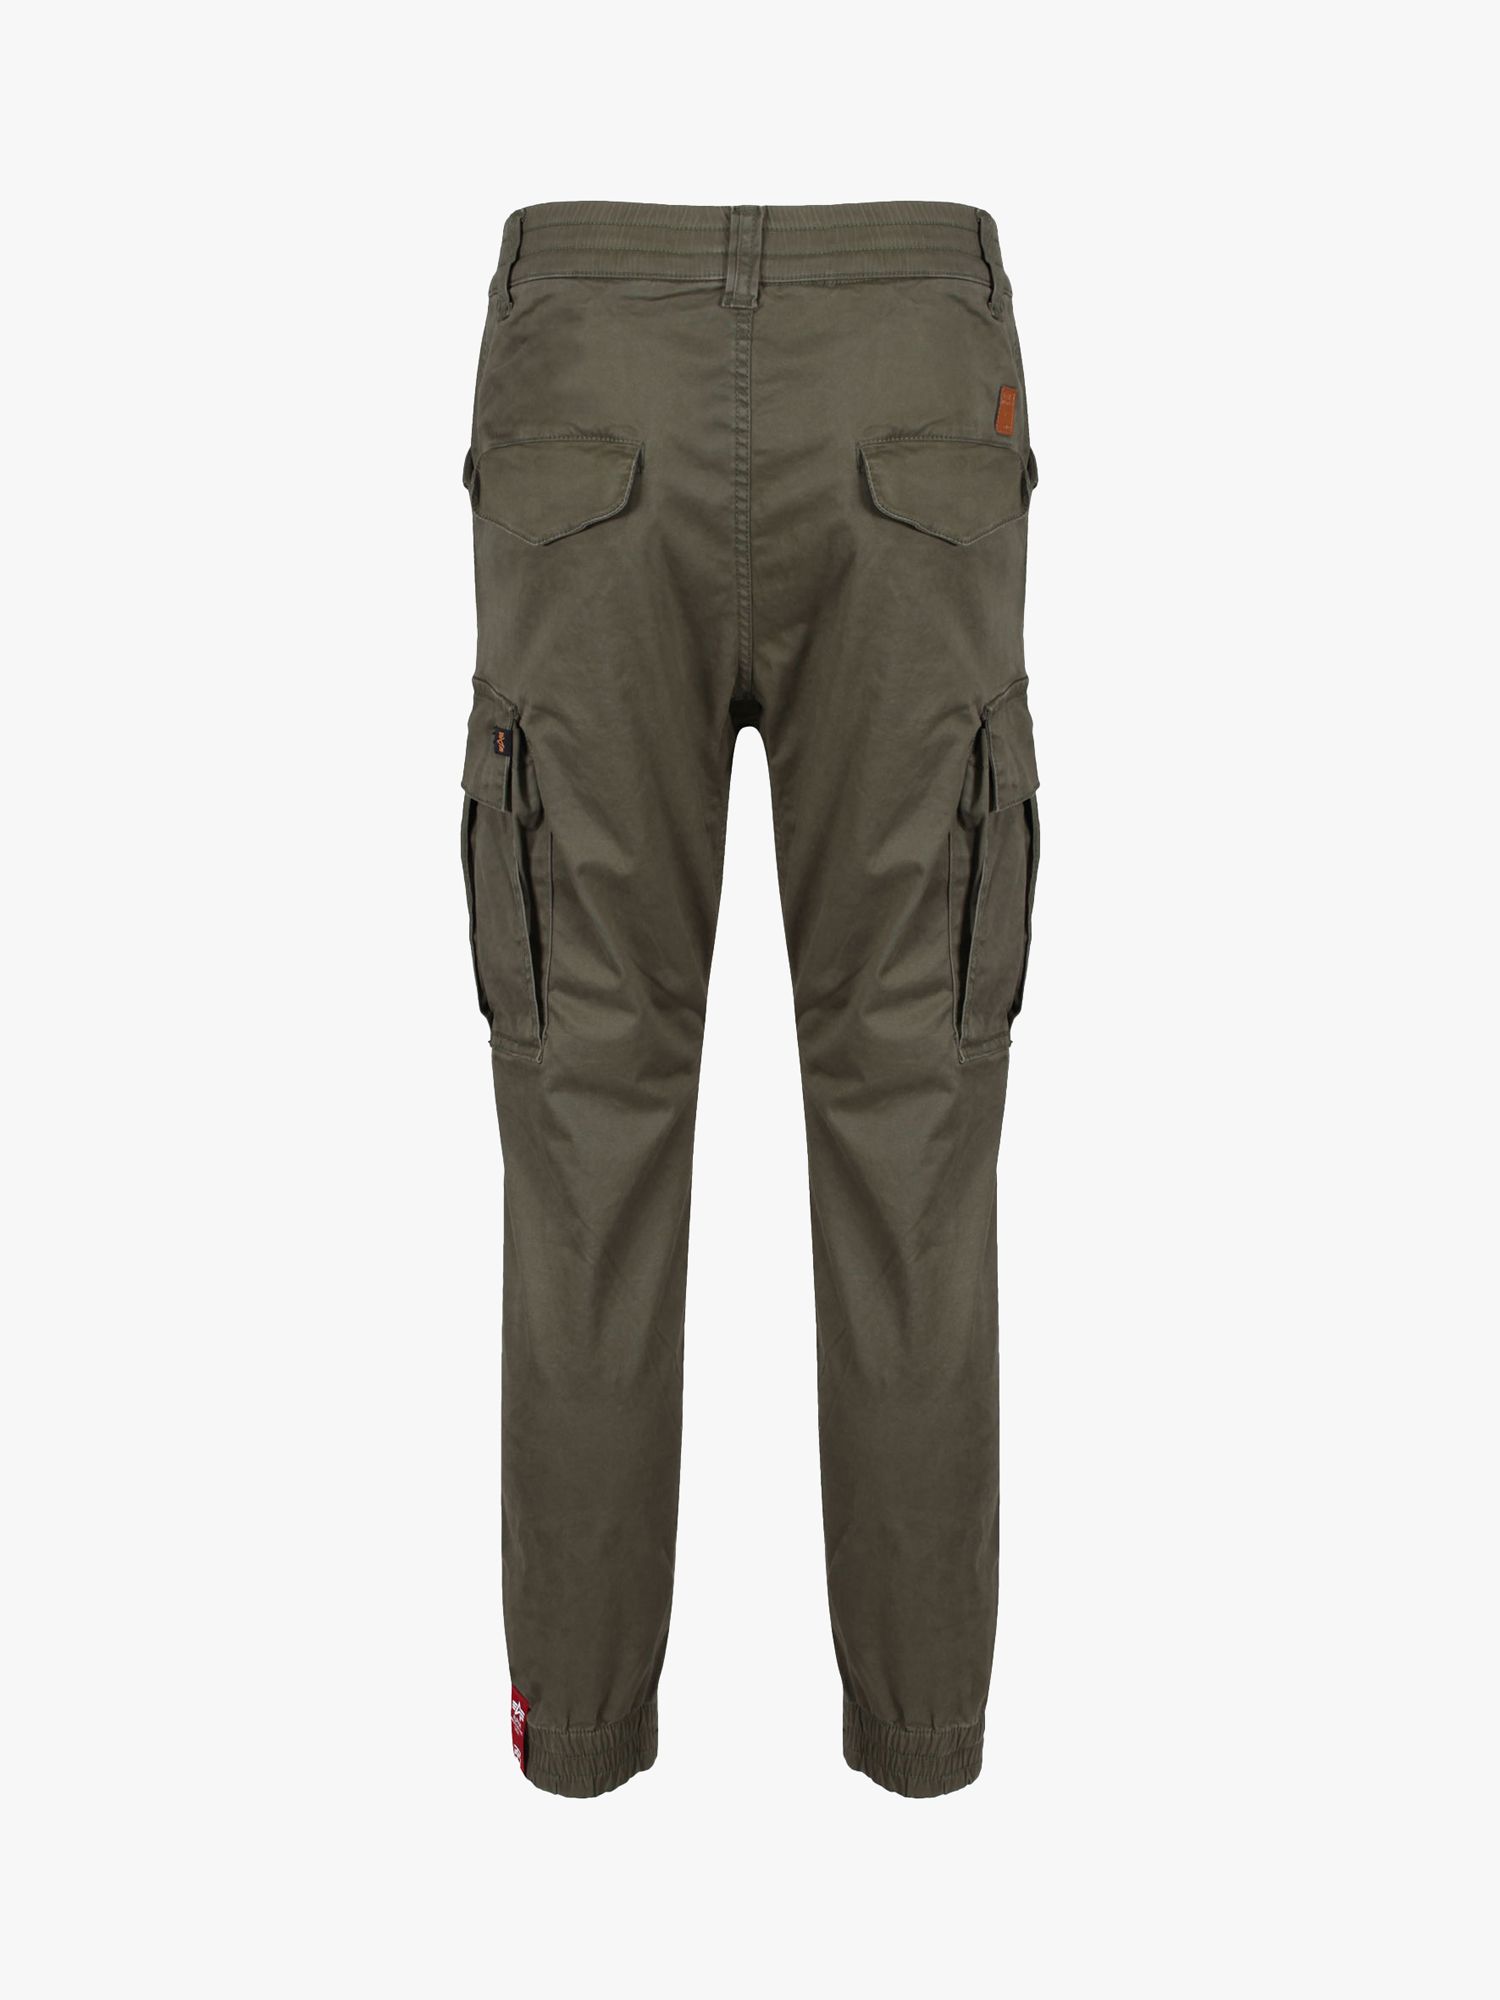 Alpha Industries Airman Cargo Trousers, Dark Olive, 30R